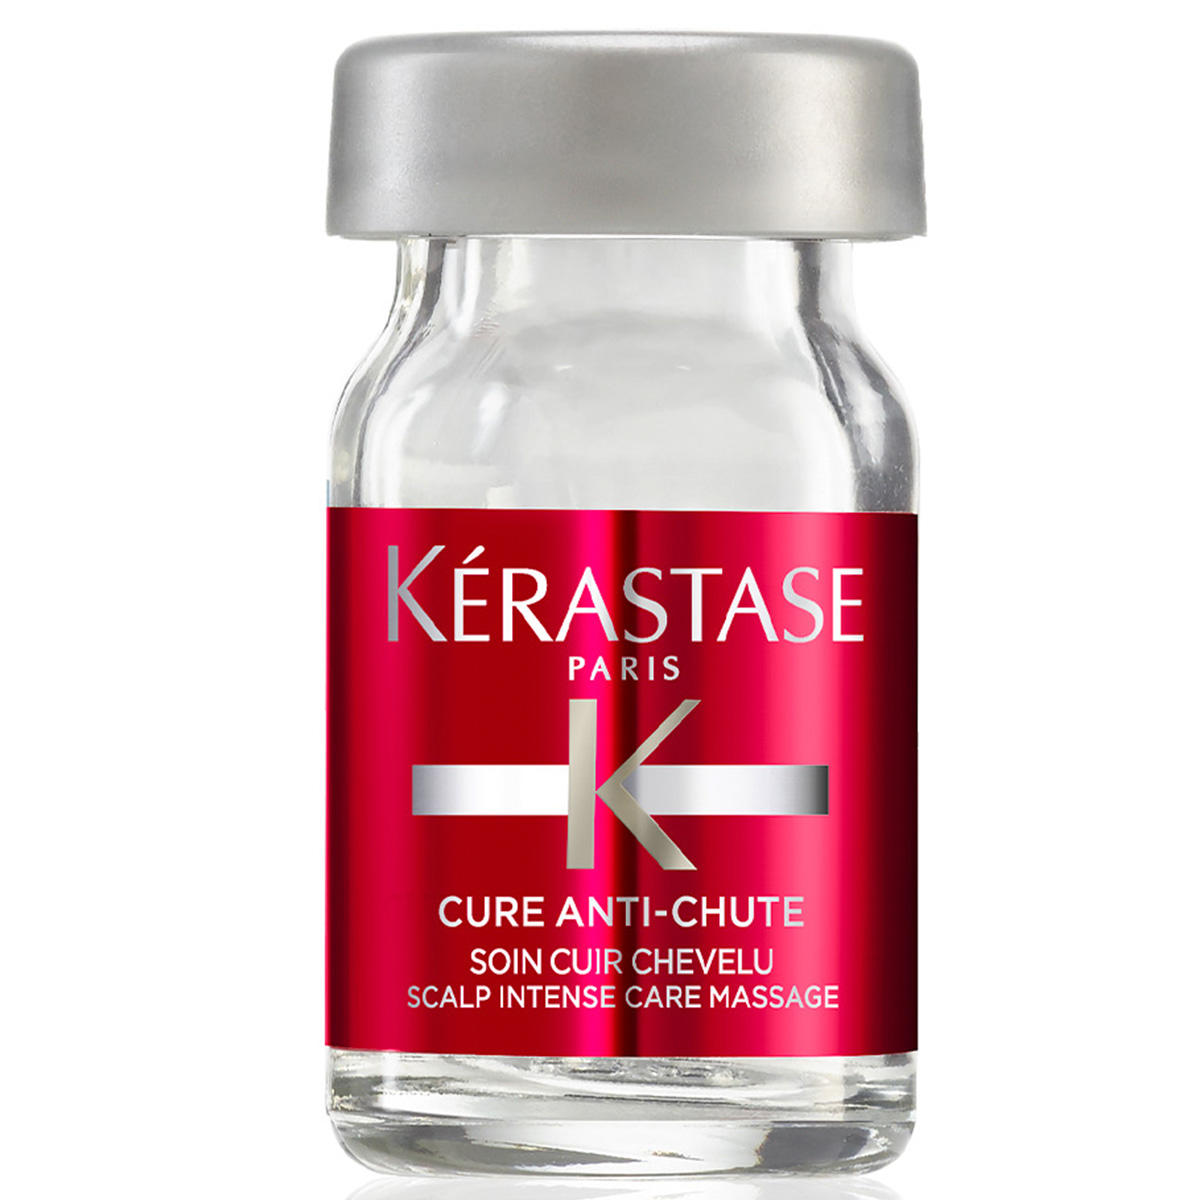 Kérastase Spécifique Cure Anti-Chute Confezione con 42 x 6 ml - 1